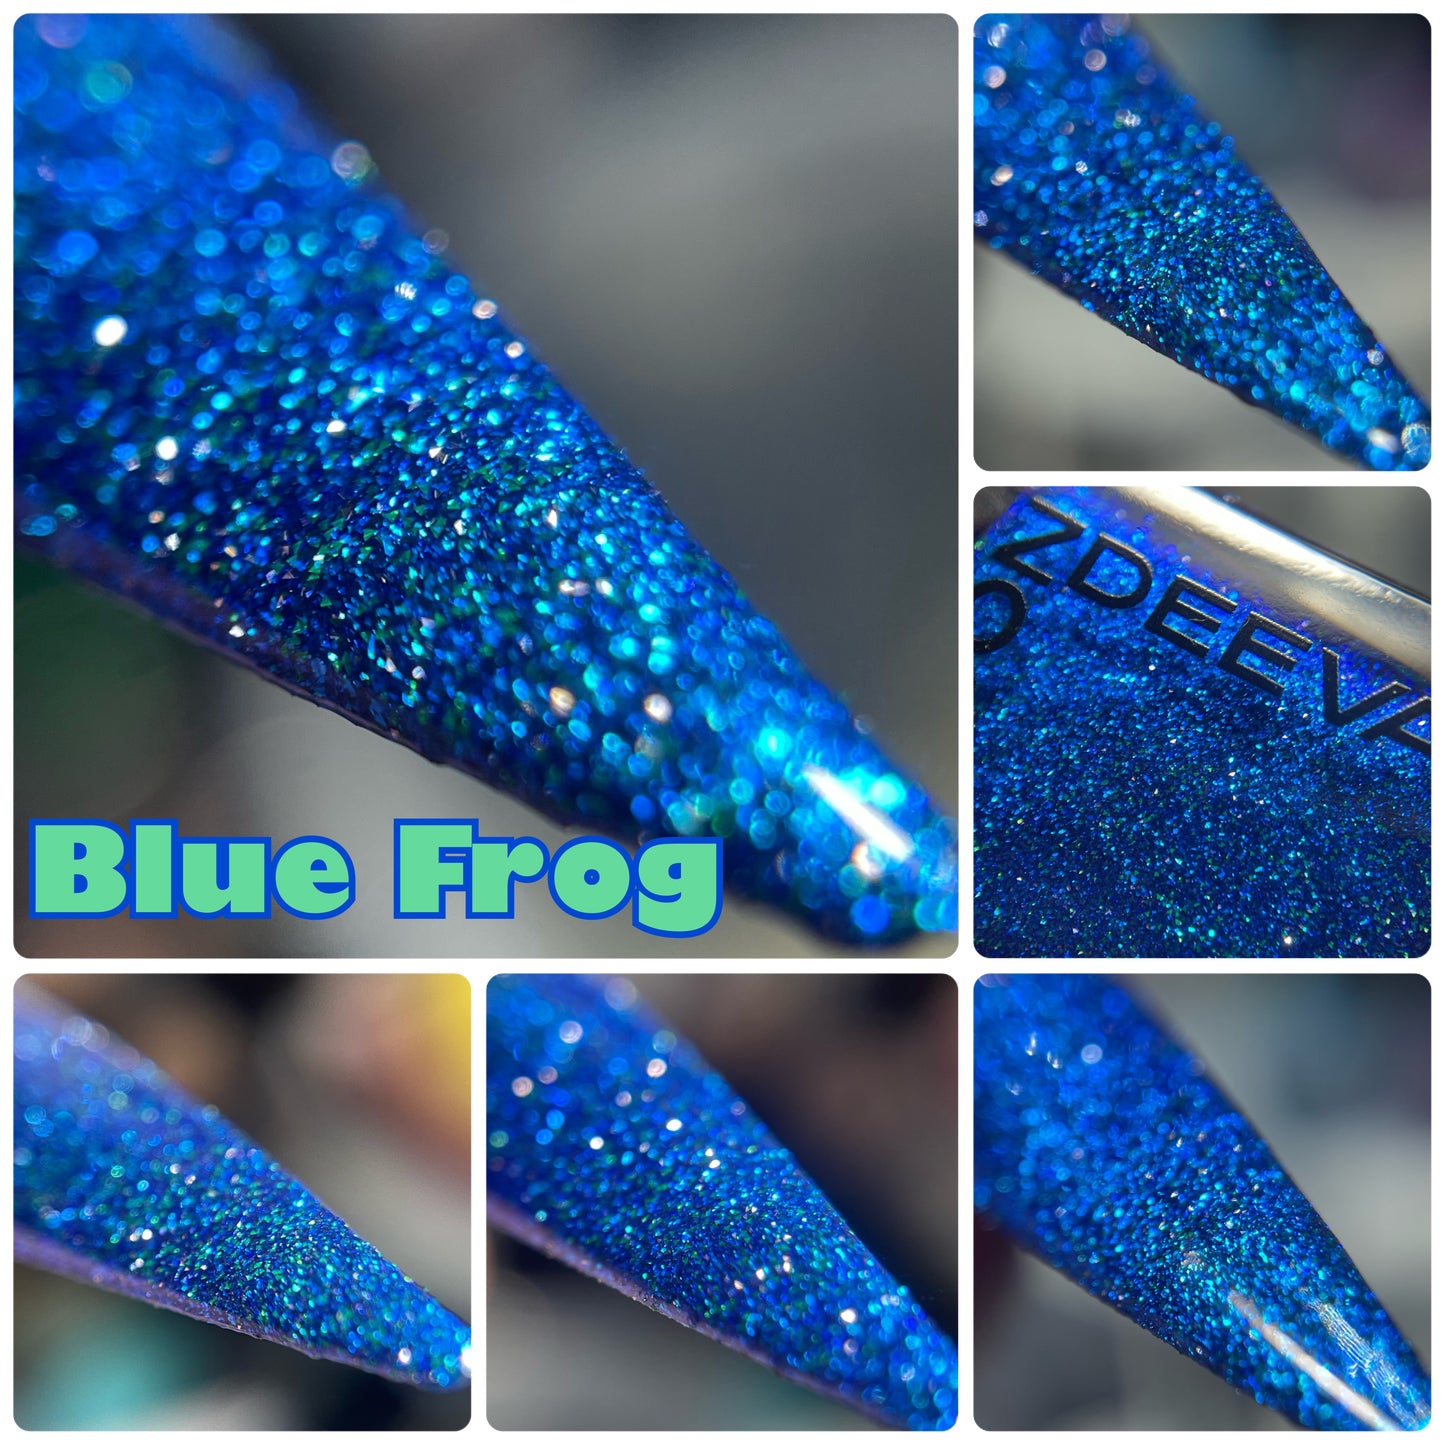 Blue Frog-Reflective